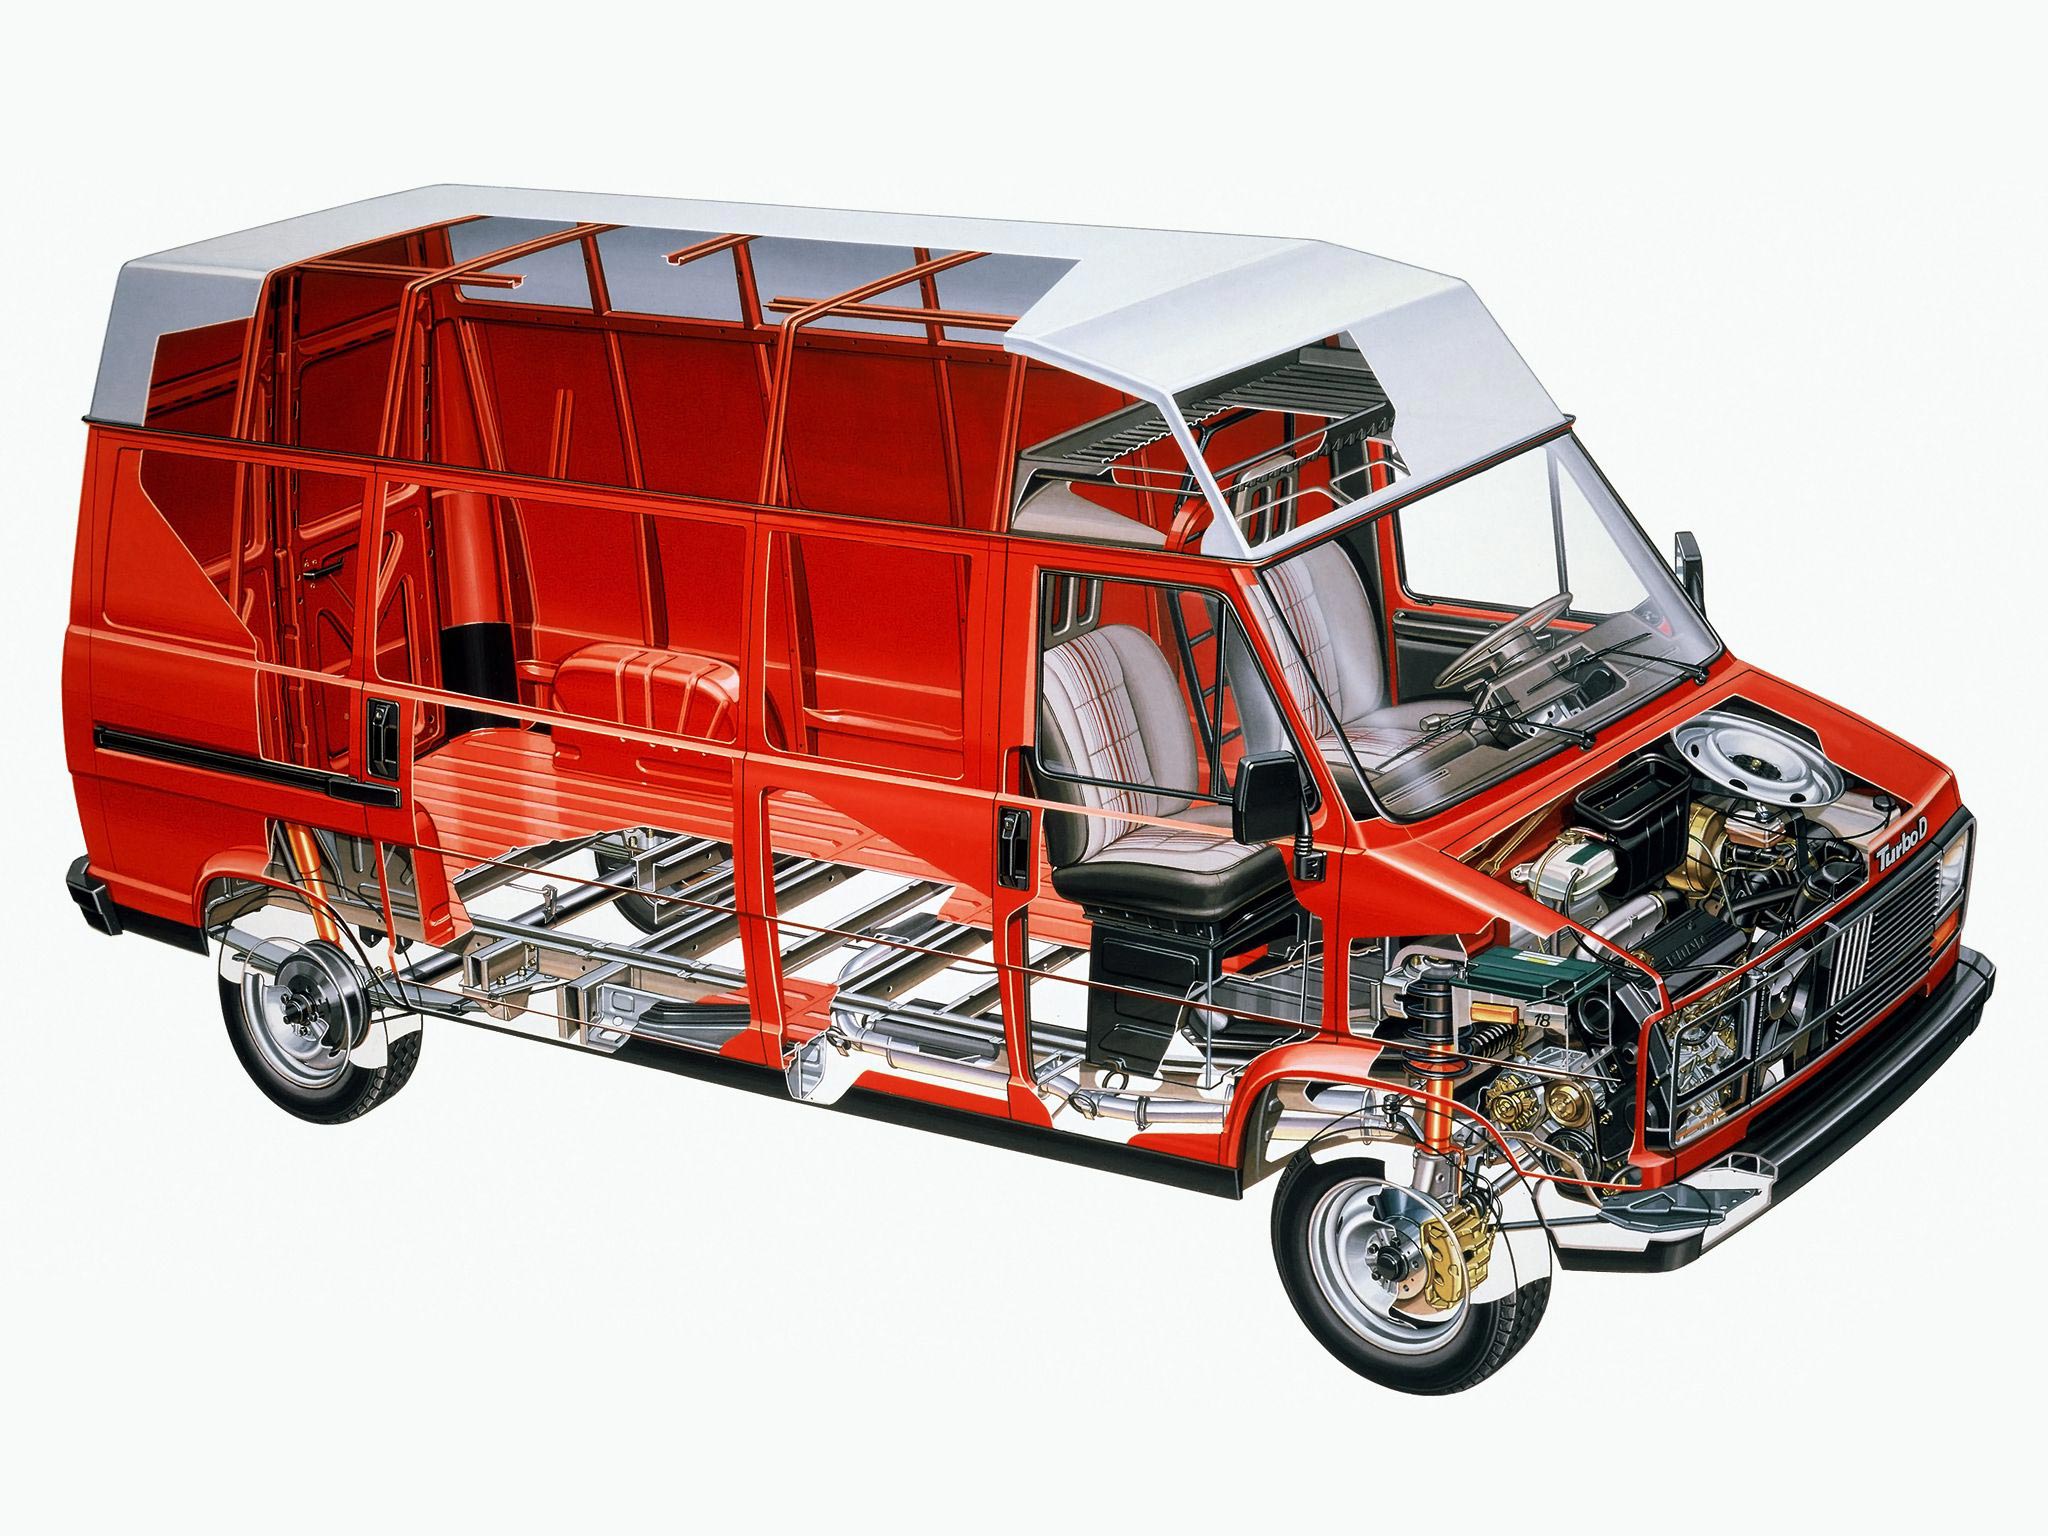 Fiat Ducato cutaway